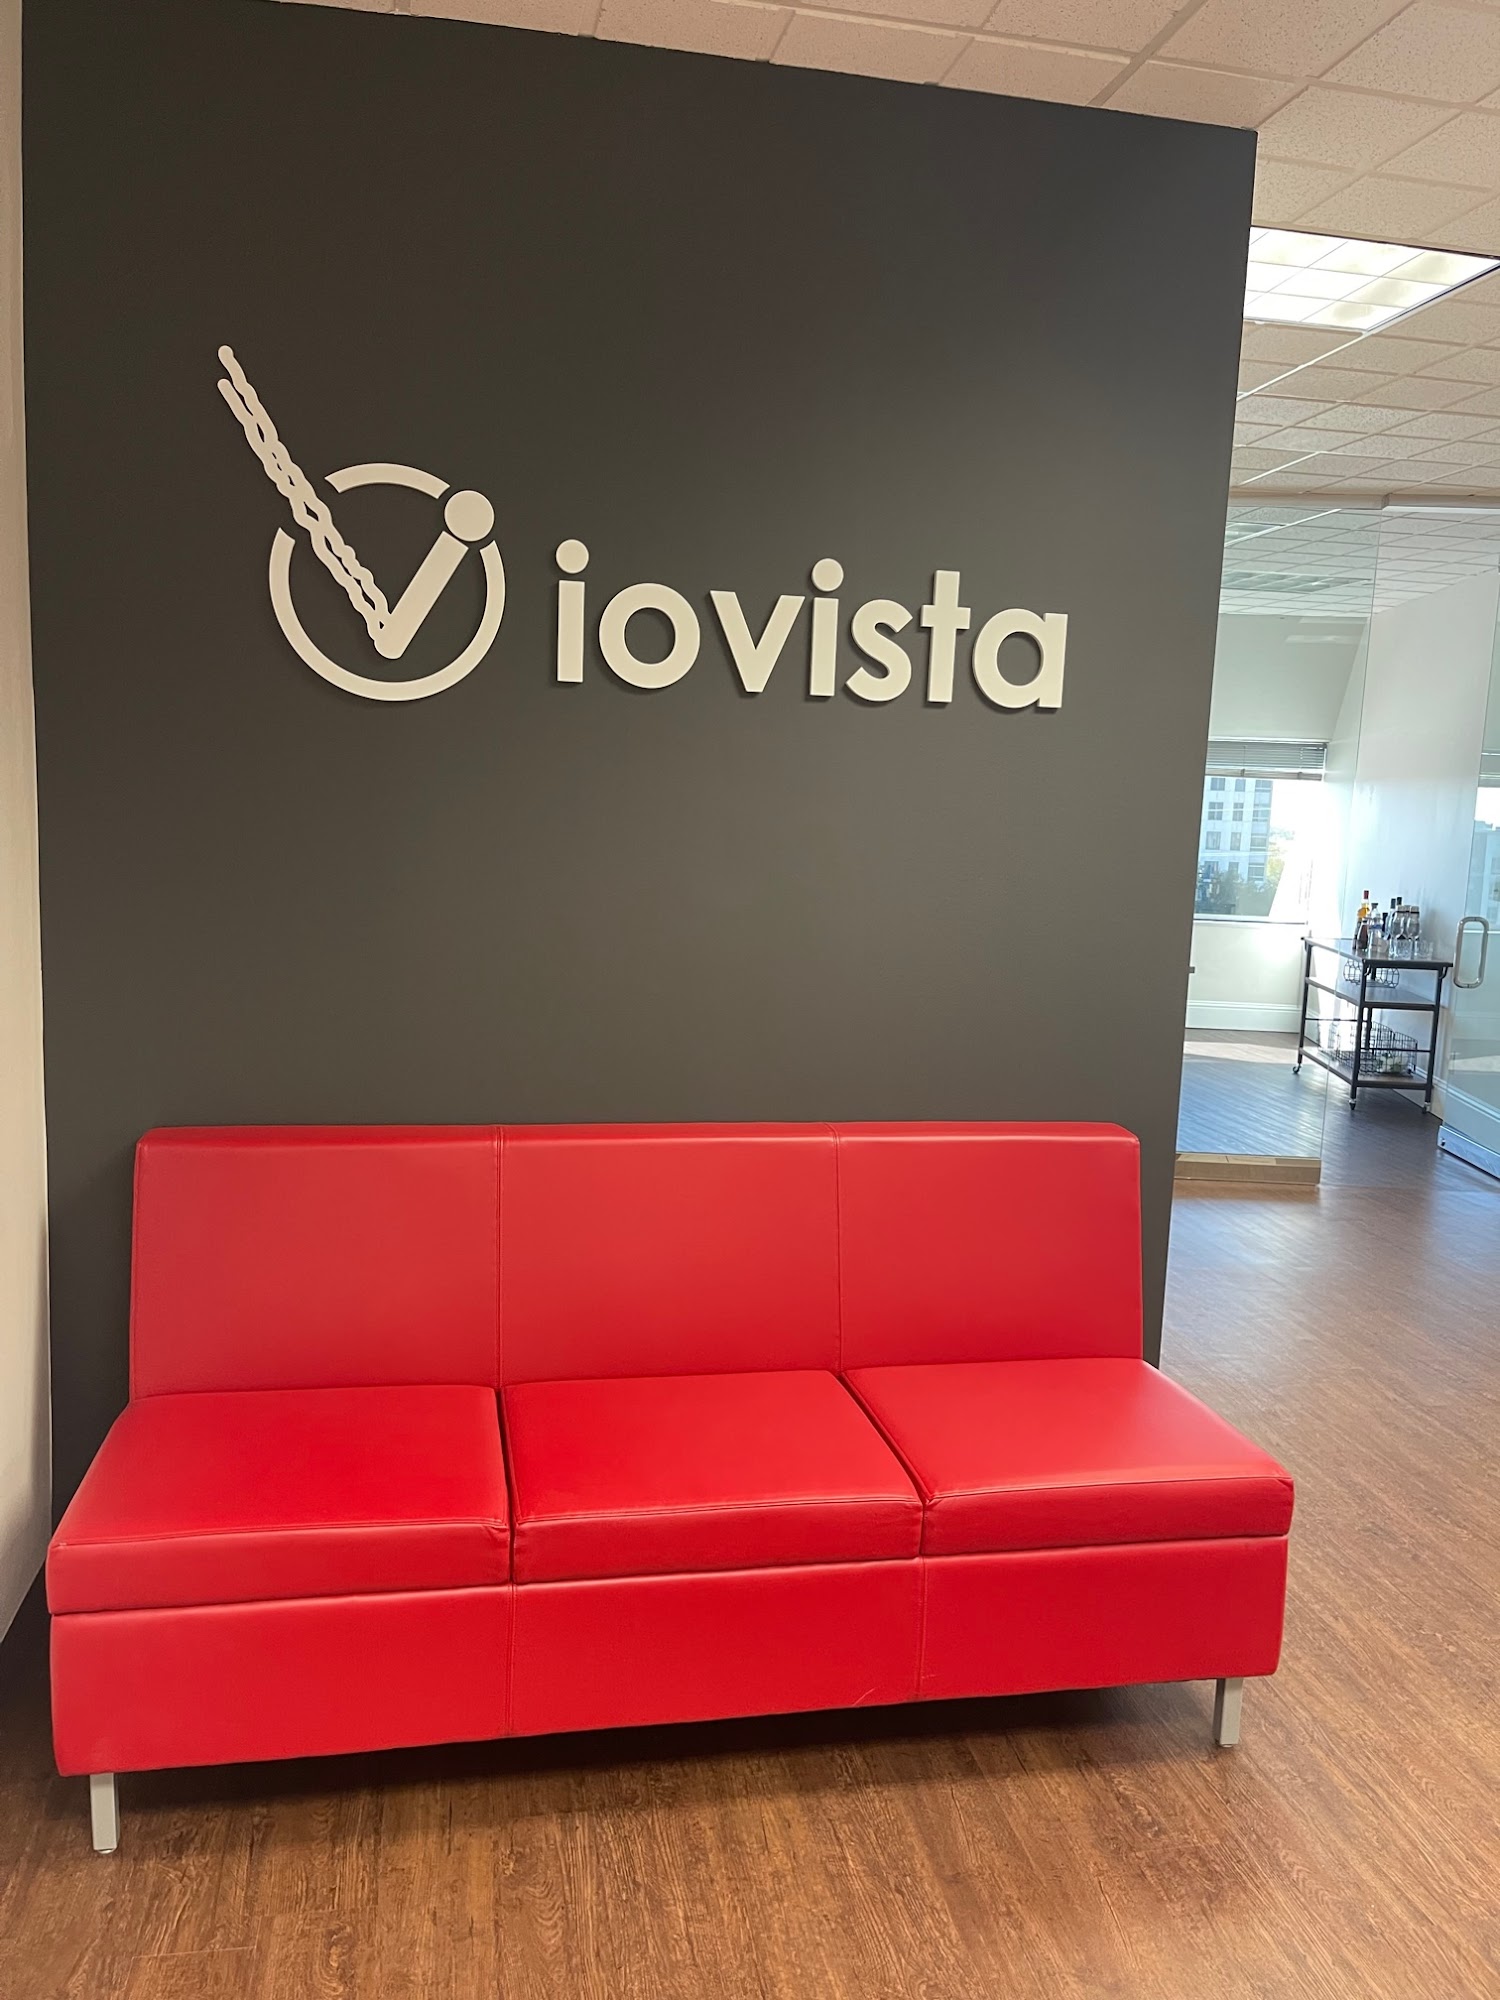 ioVista, Inc.